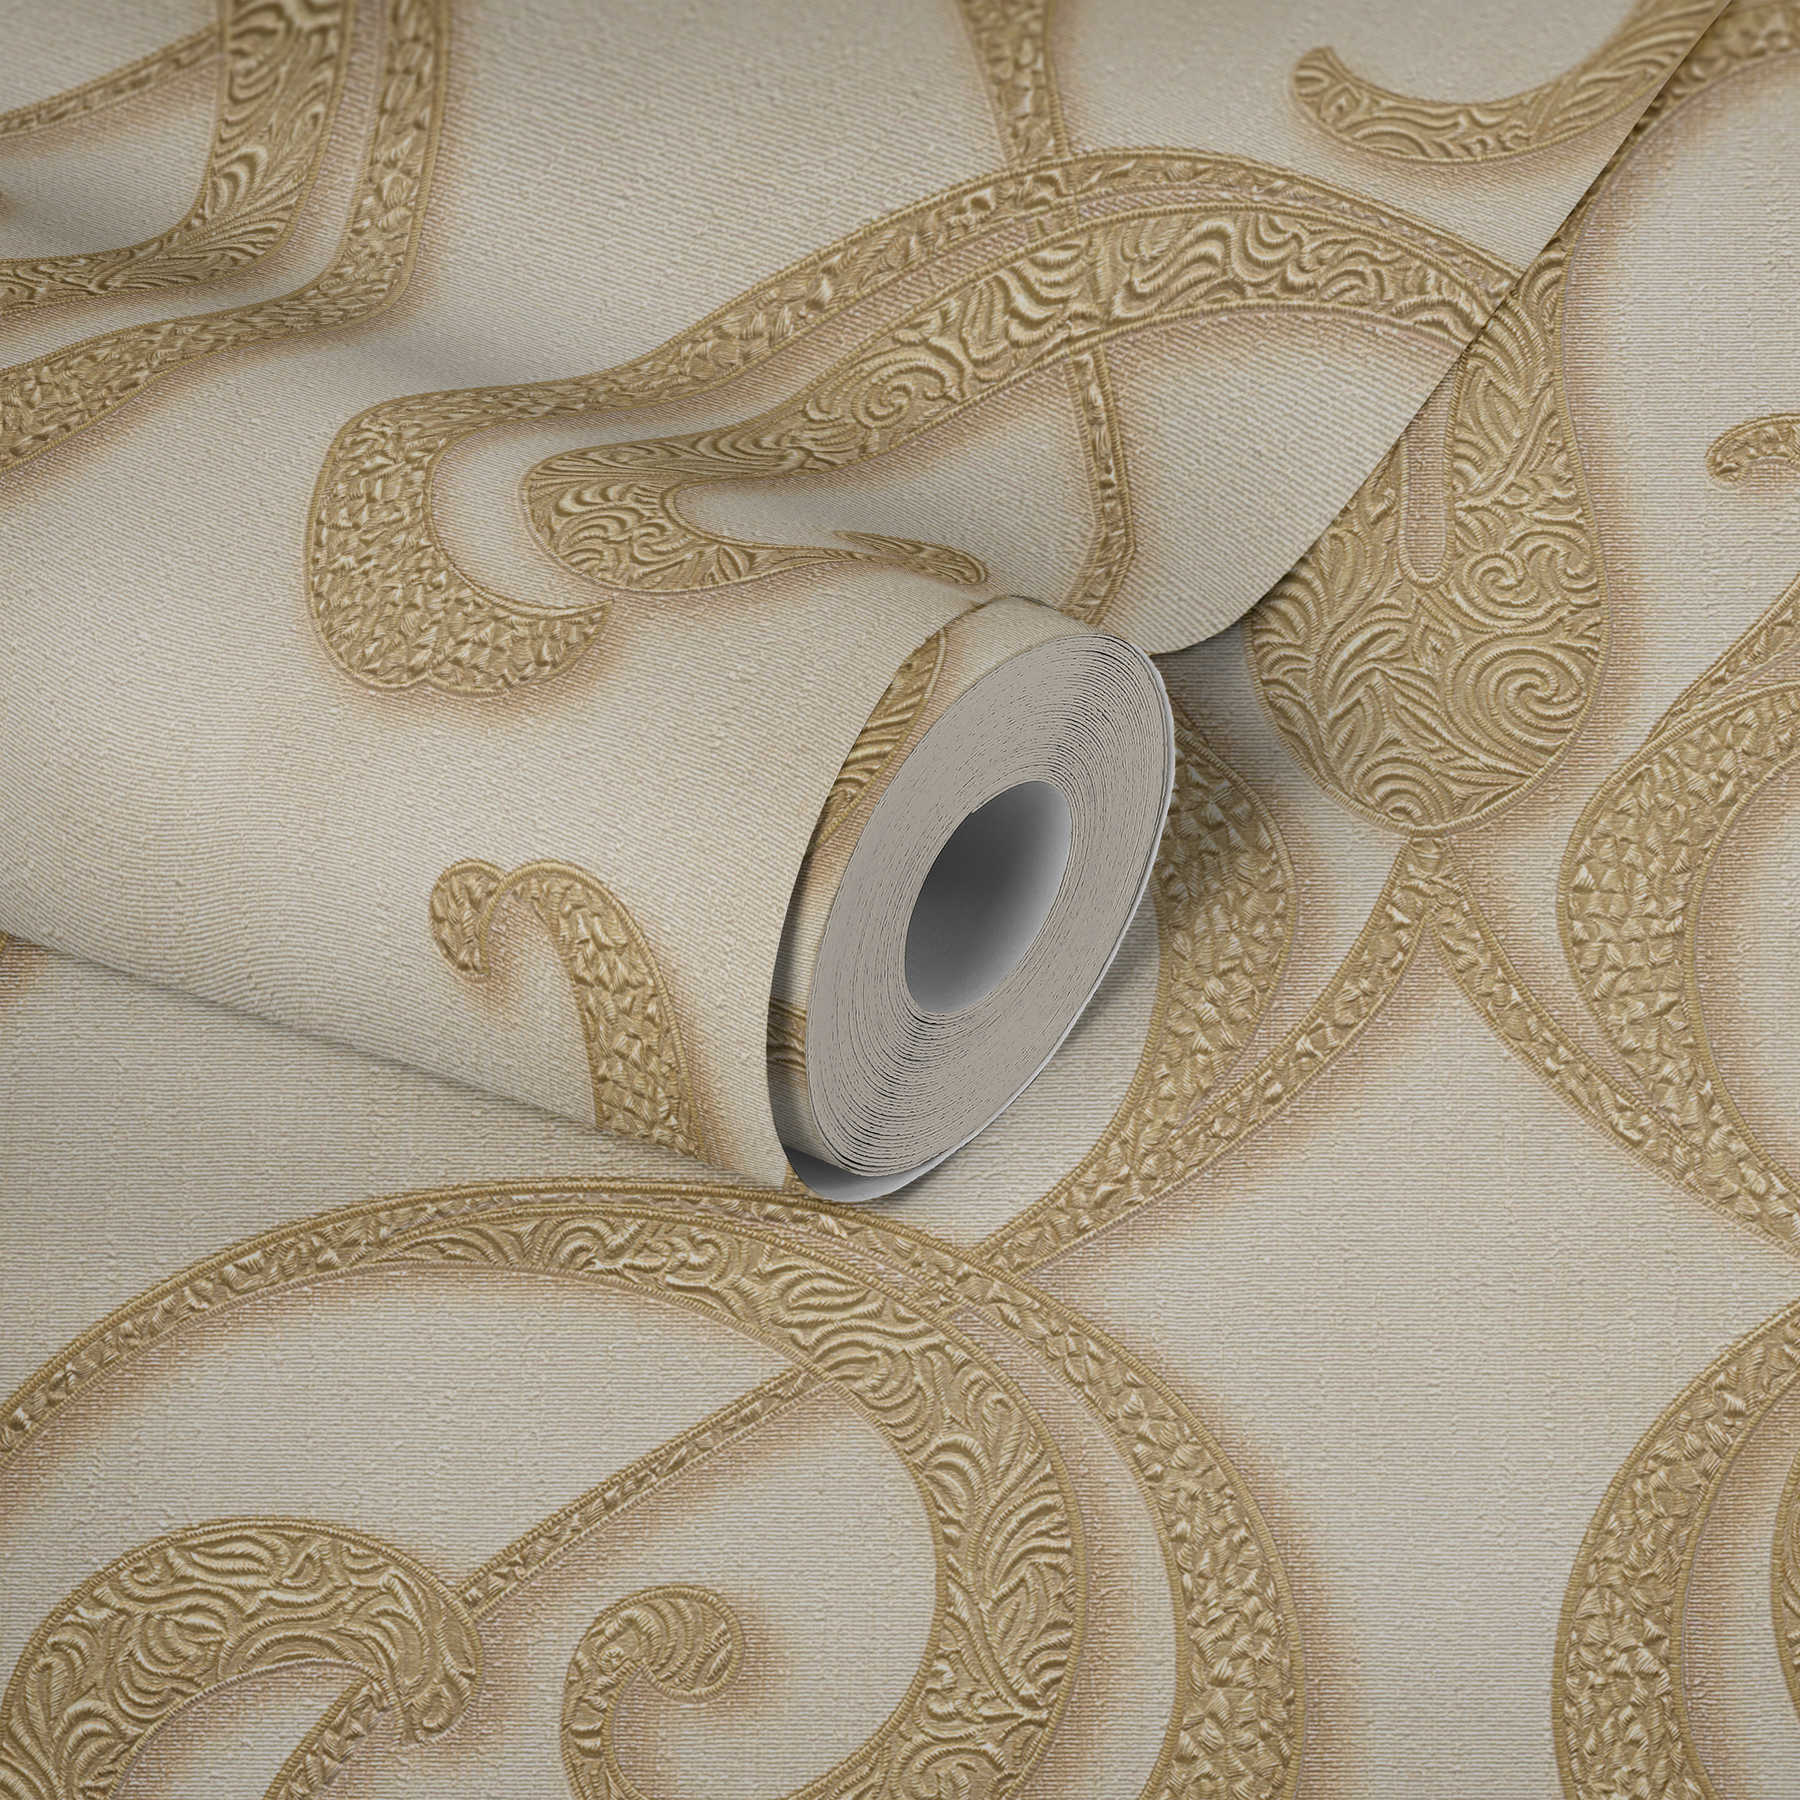             Metallic wallpaper with filigree ornament pattern - cream
        